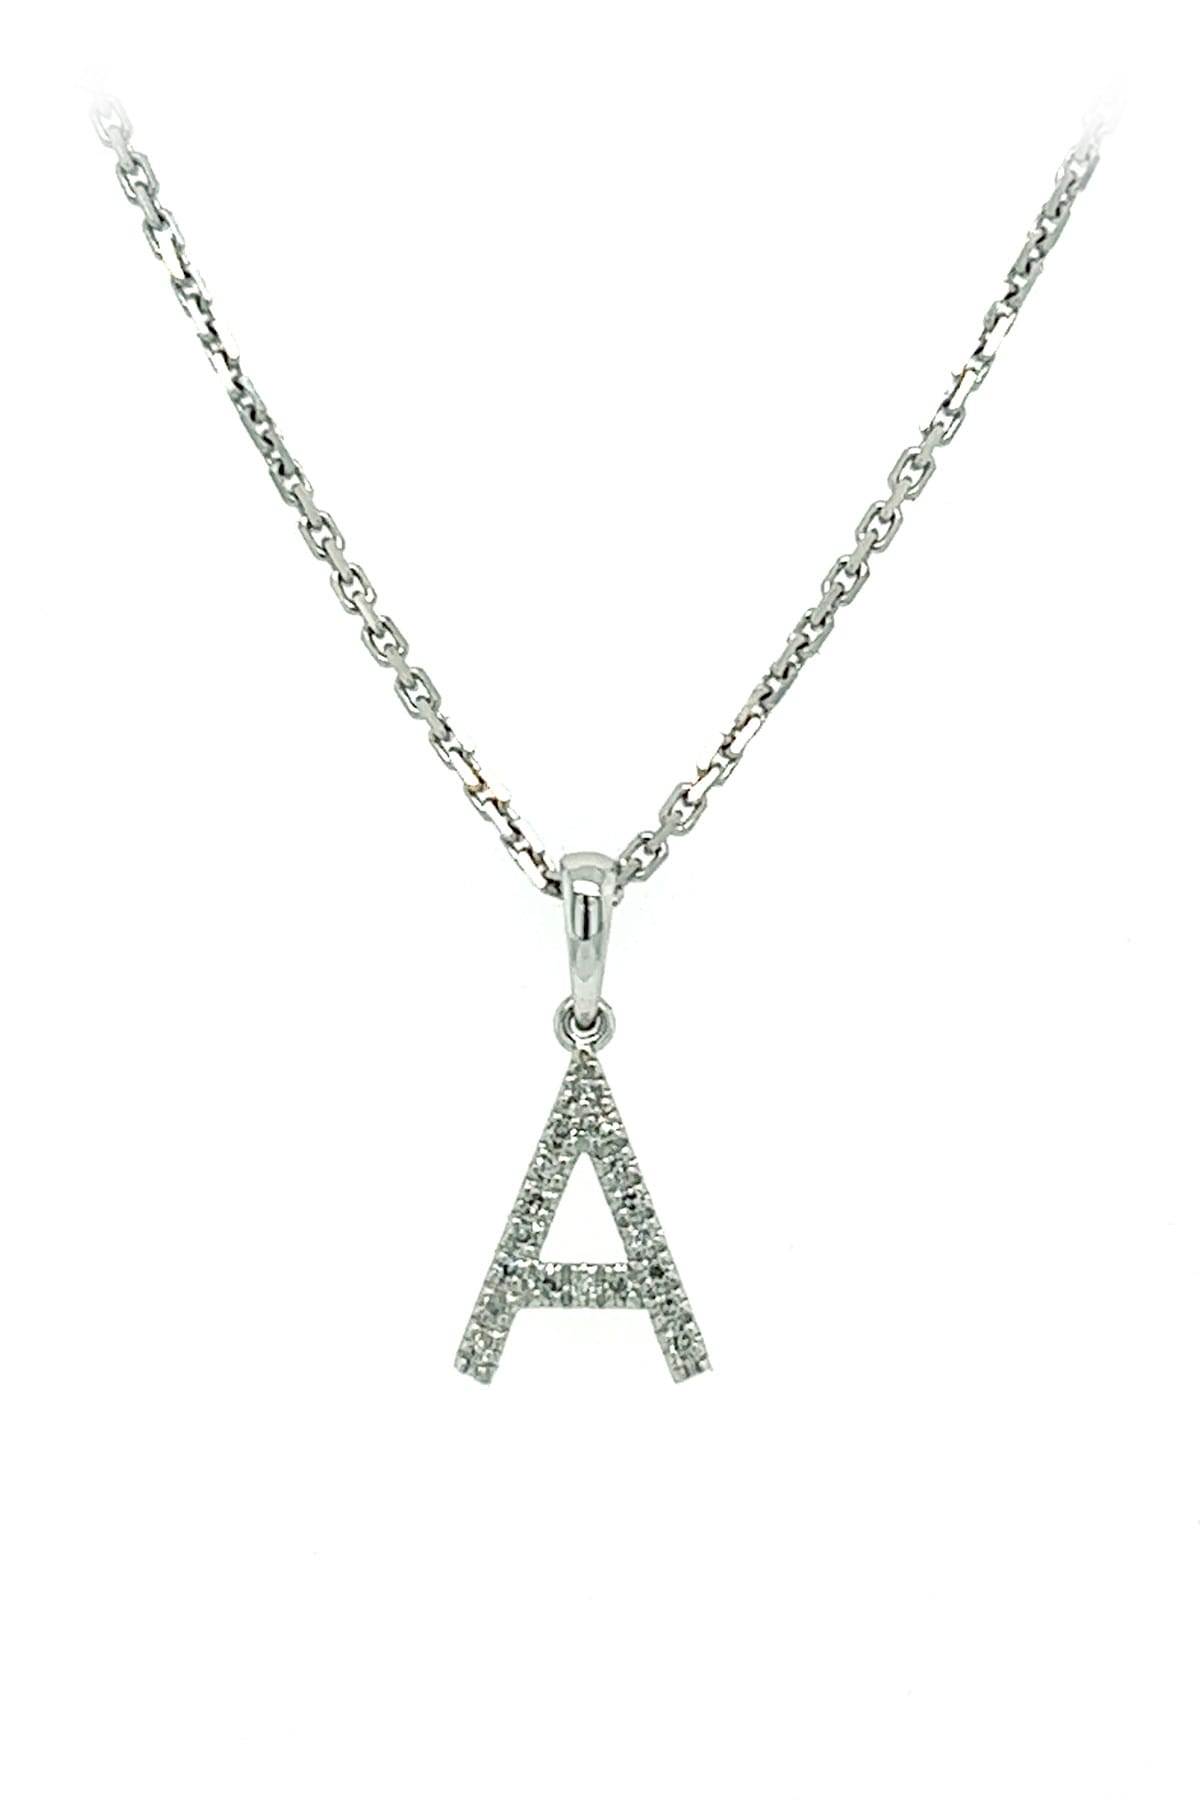 9 Carat White Gold Diamond Set Initial Pendant available at LeGassick Diamonds and Jewellery Gold Coast, Australia.